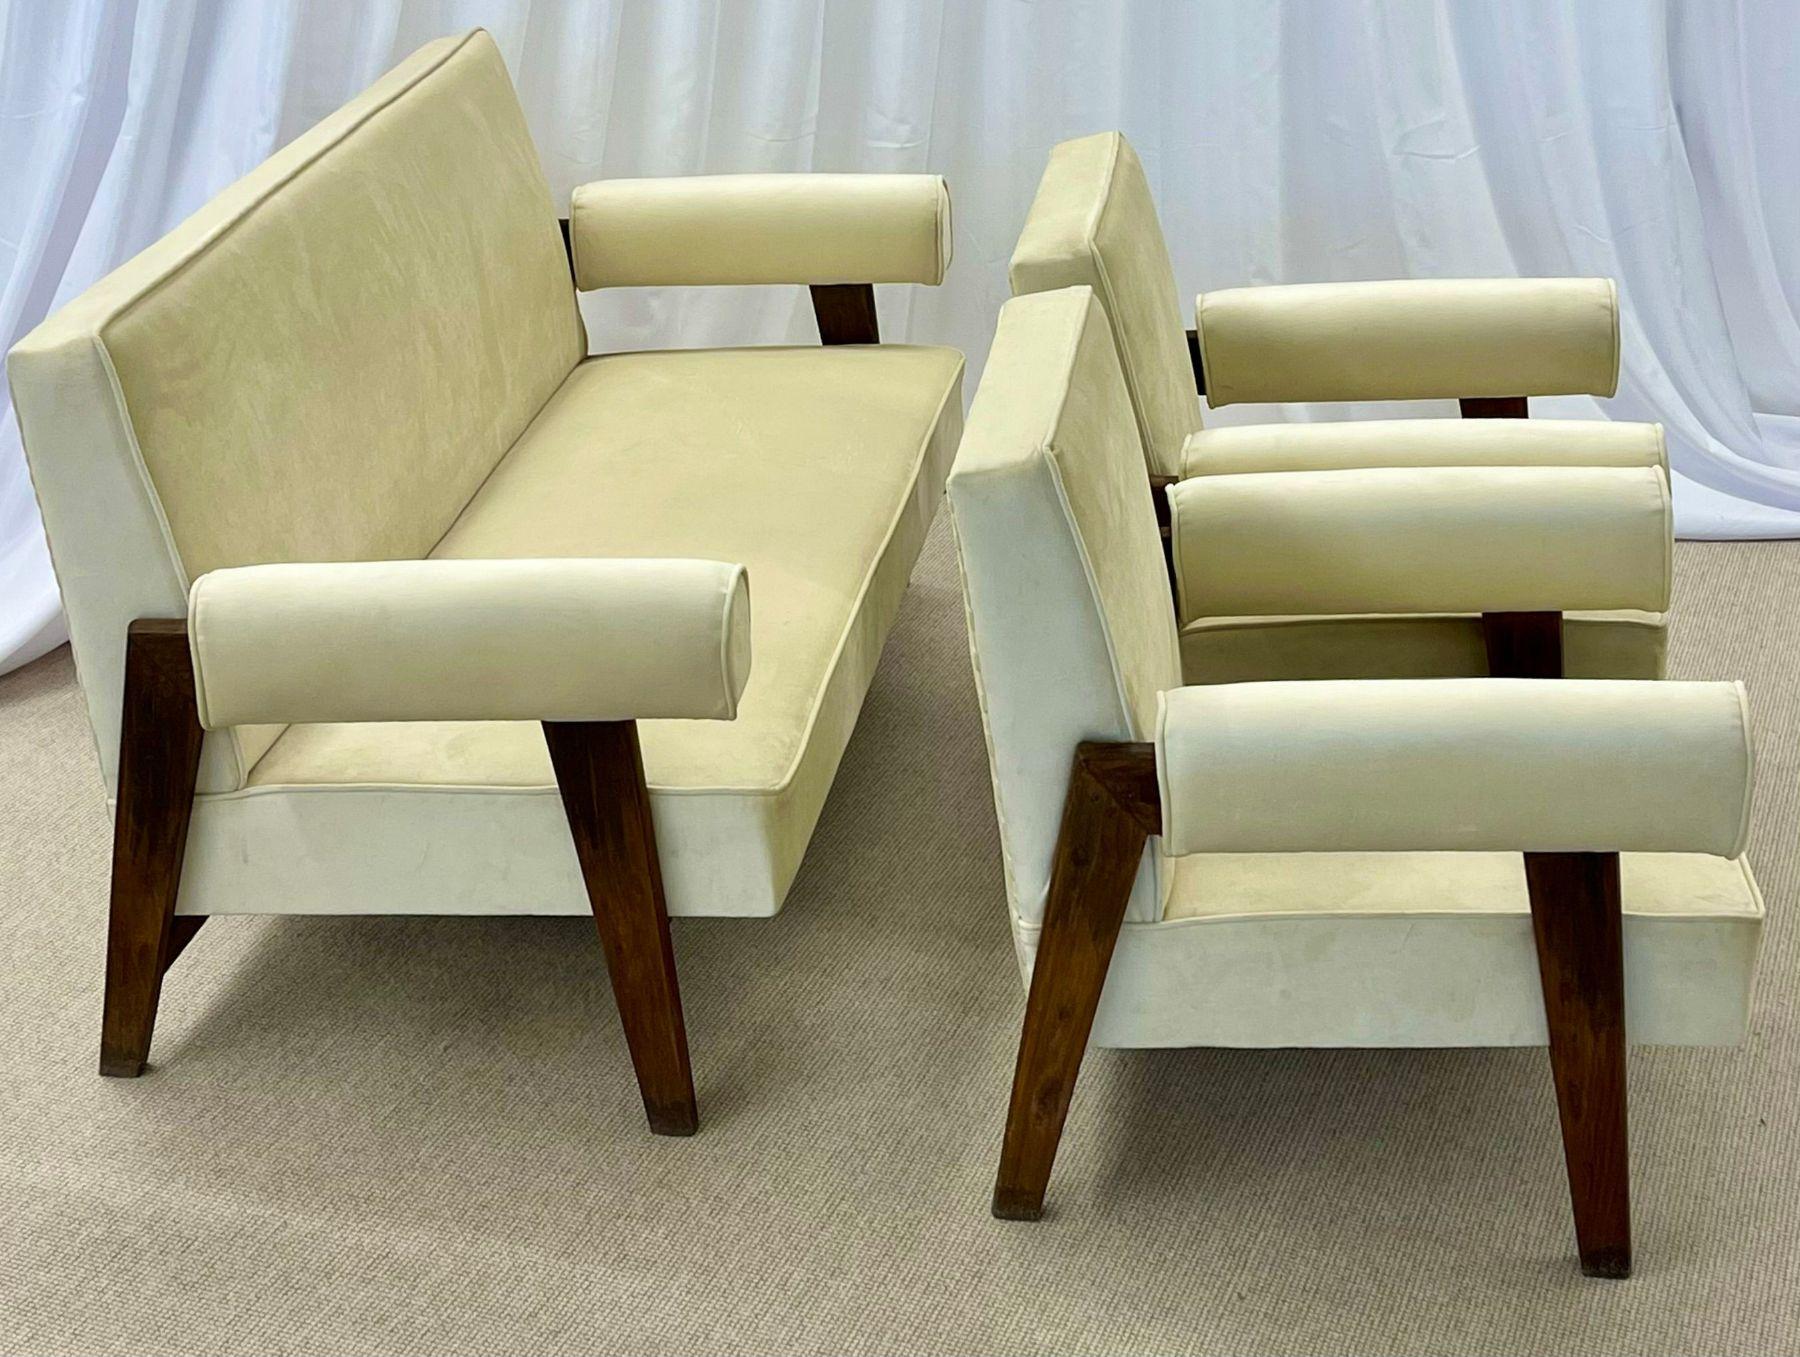 Pierre Jeanneret, French Mid-Century Modern, Bridge Chairs, Chandigarh c. 1960s For Sale 1